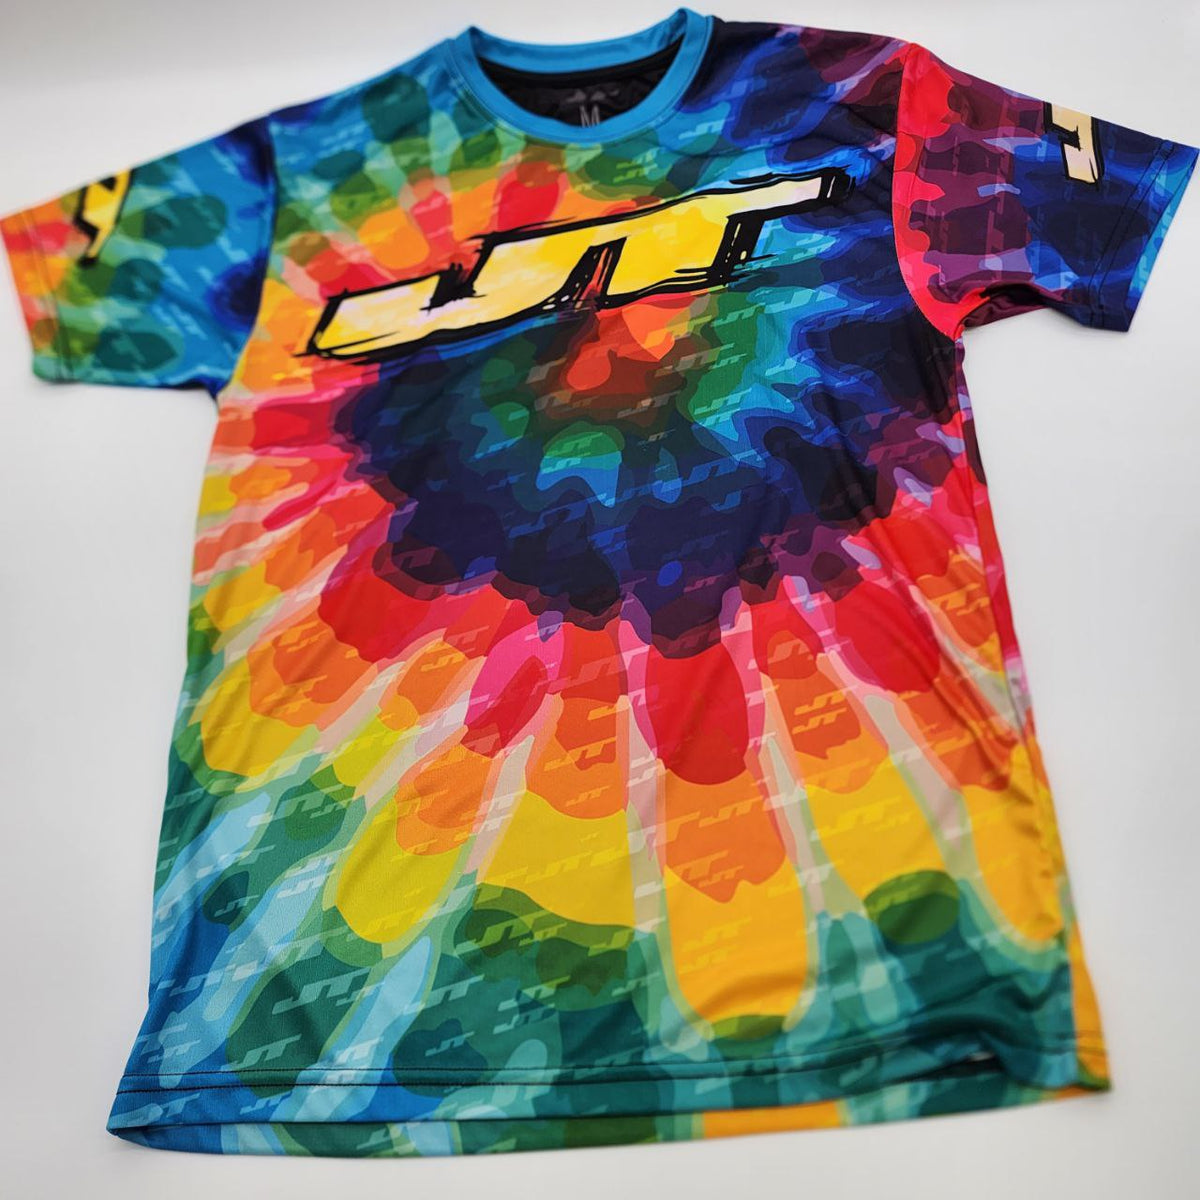 JT Supersoft T-Shirt - Tie Dye